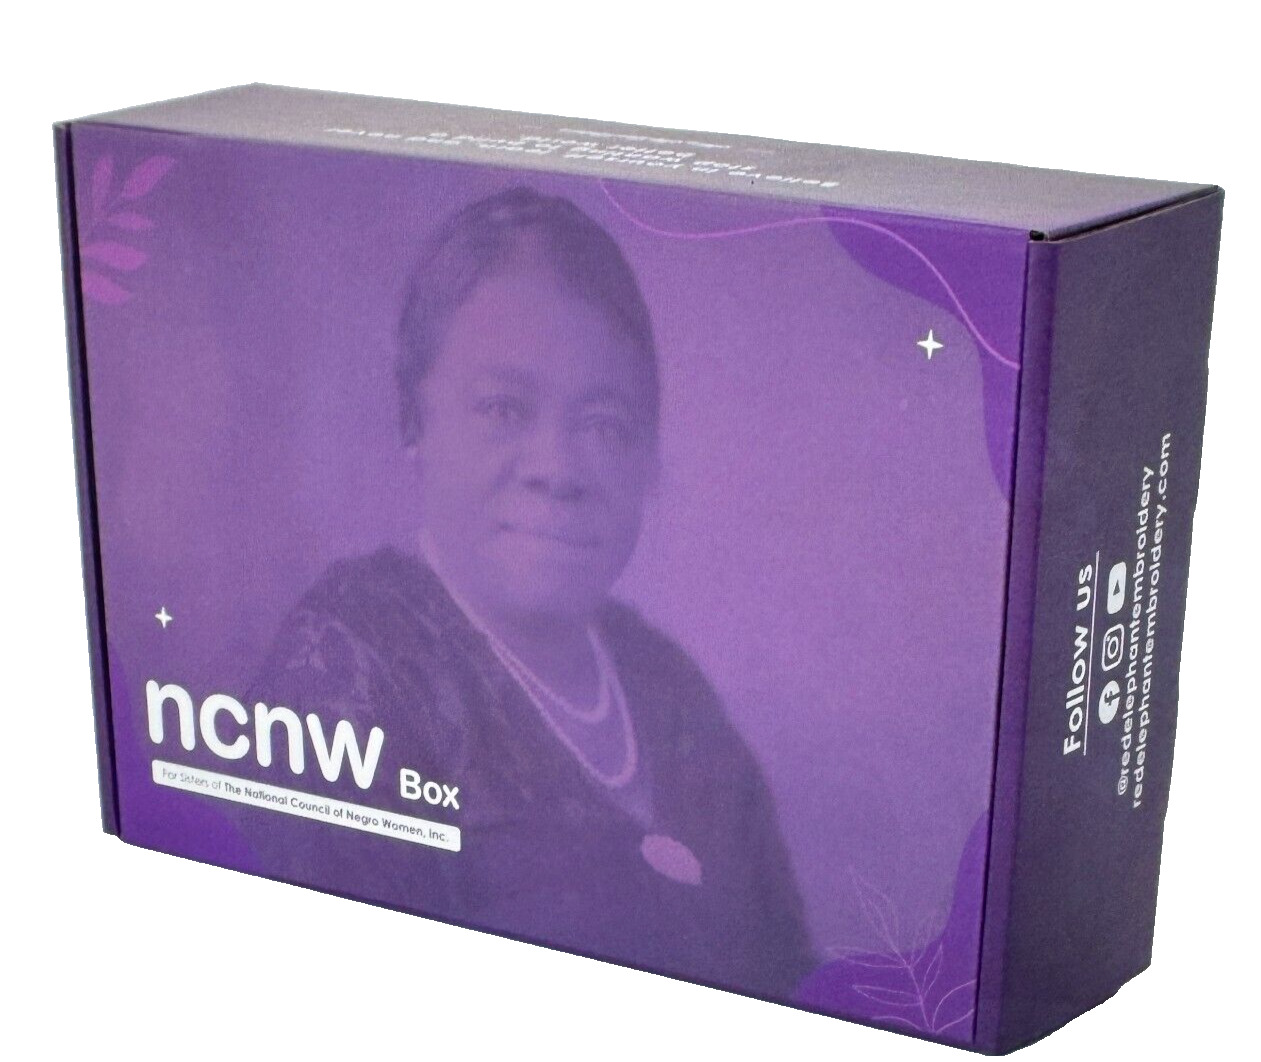 NCNW (National Council of Negro Women, Inc.) Elegant Gift Box, plus 4 items